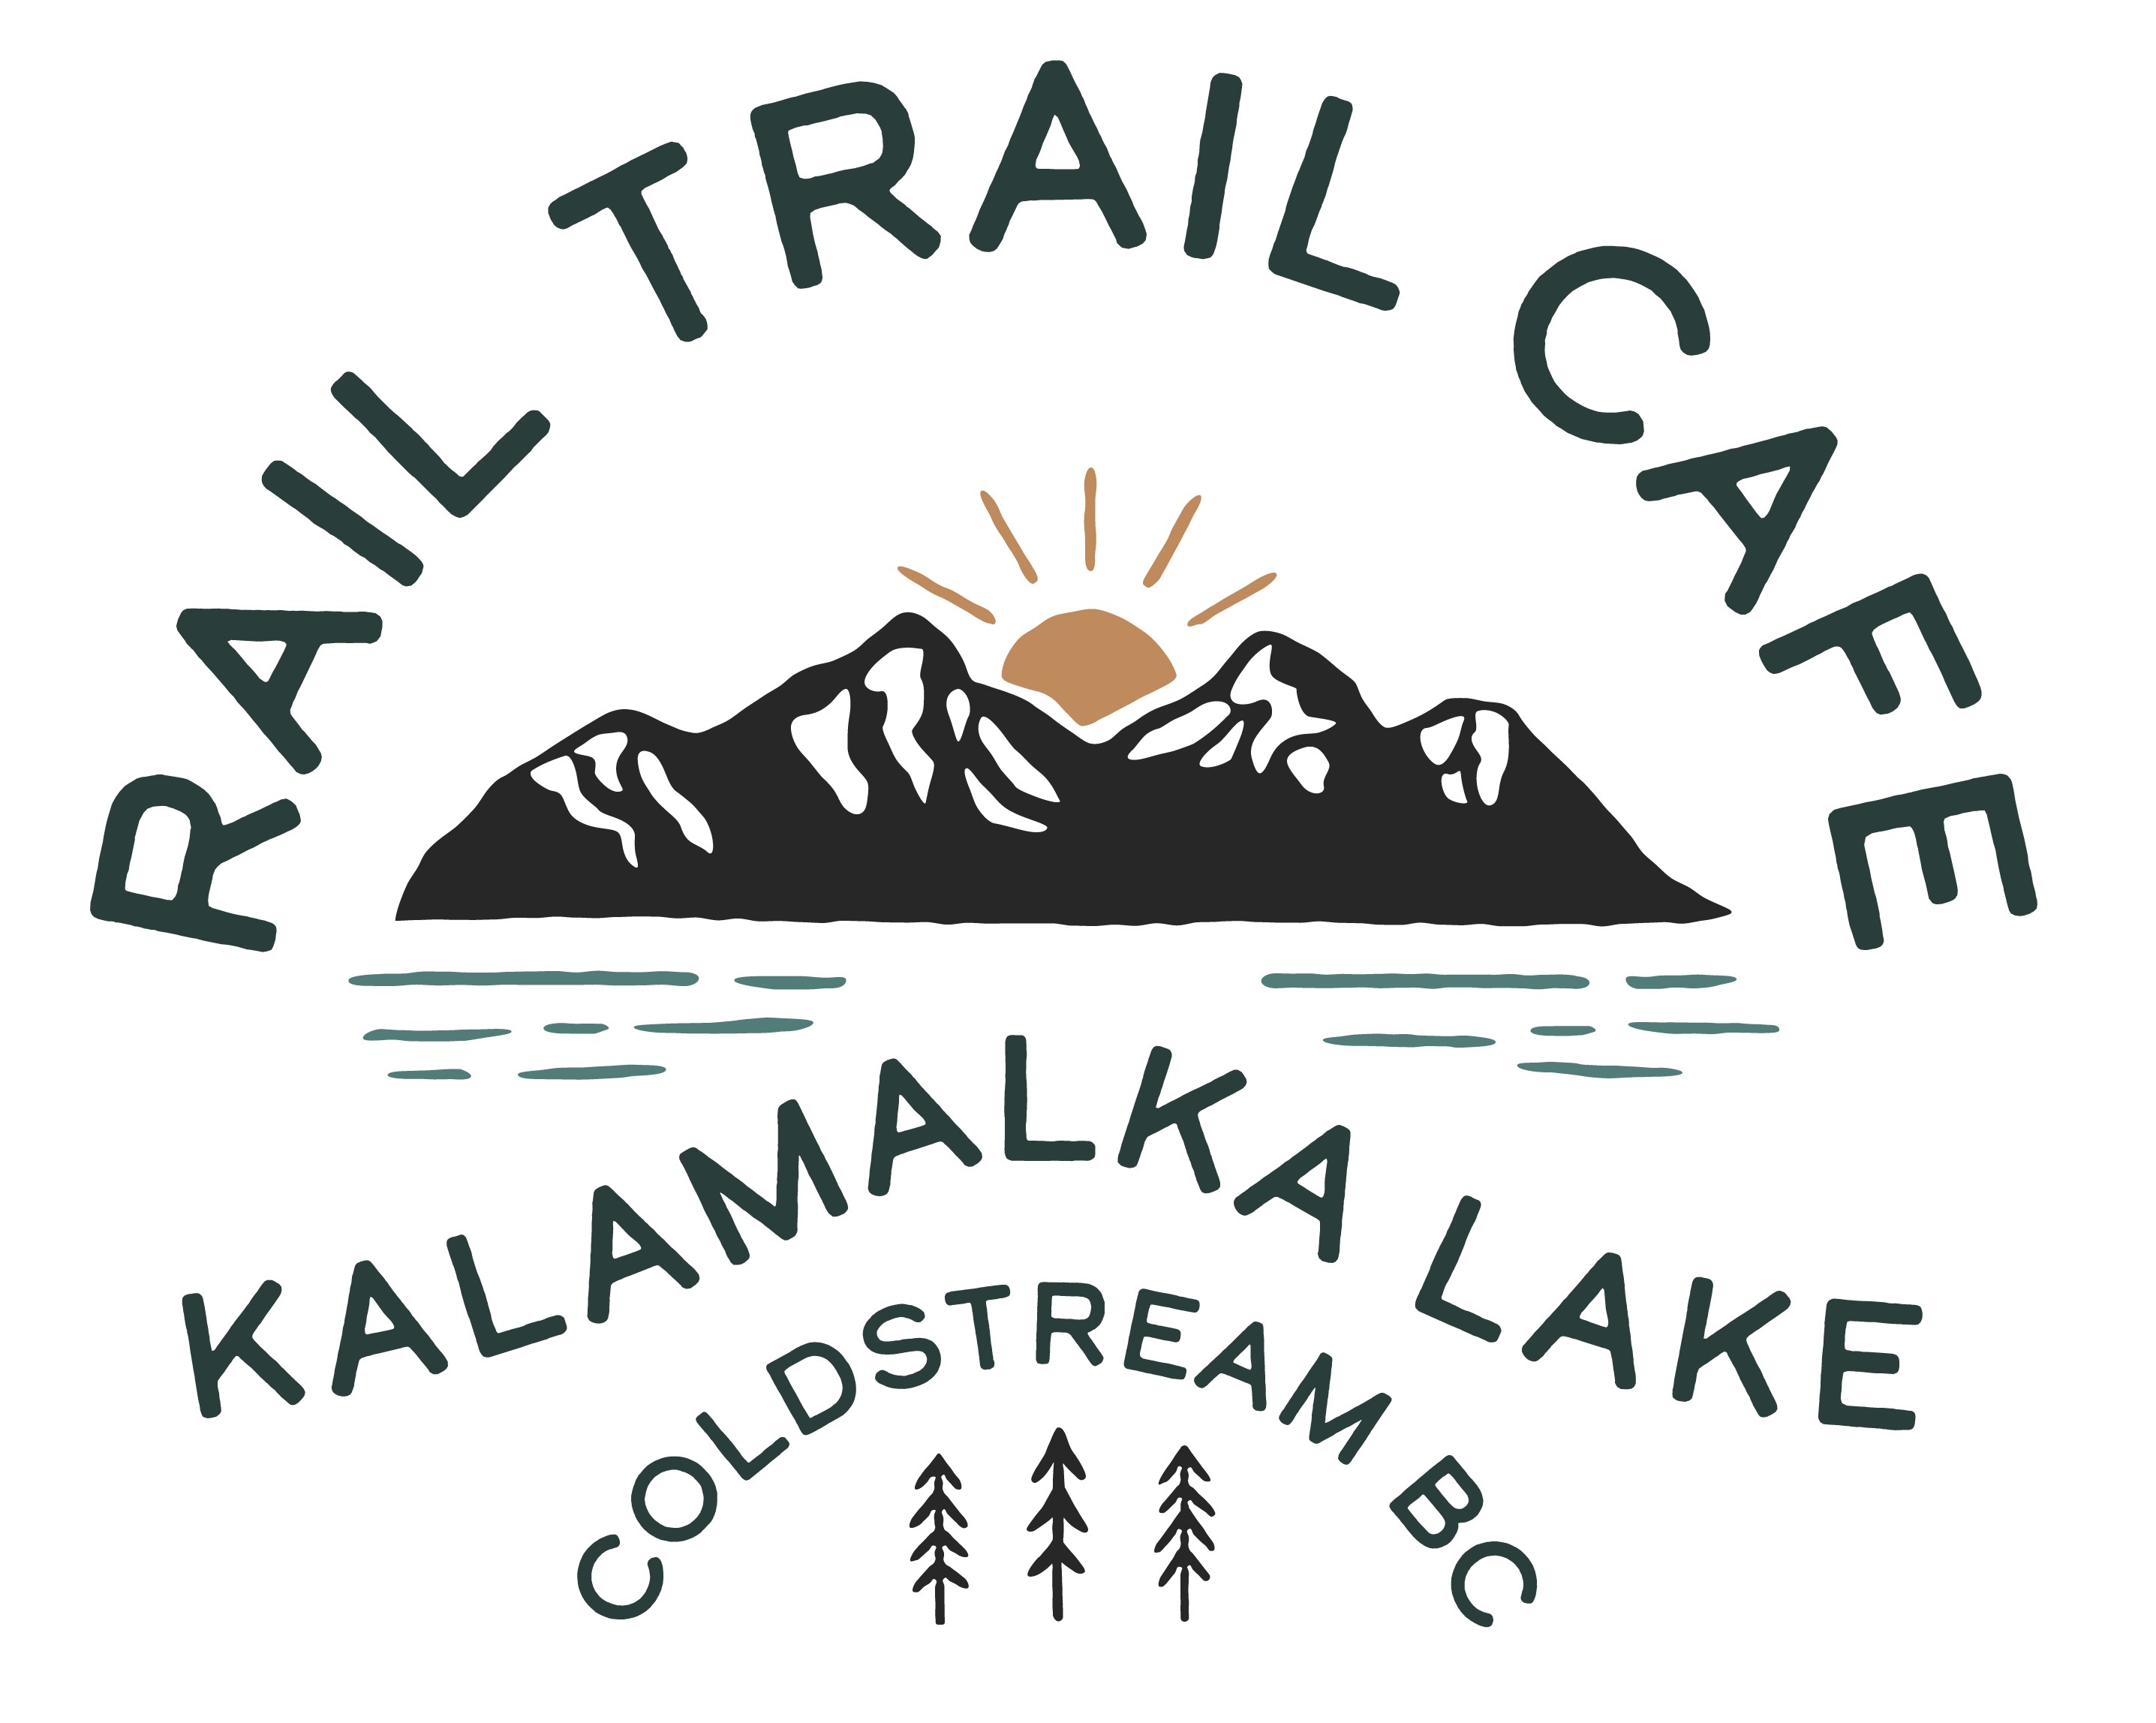 Rail Trail Cafe